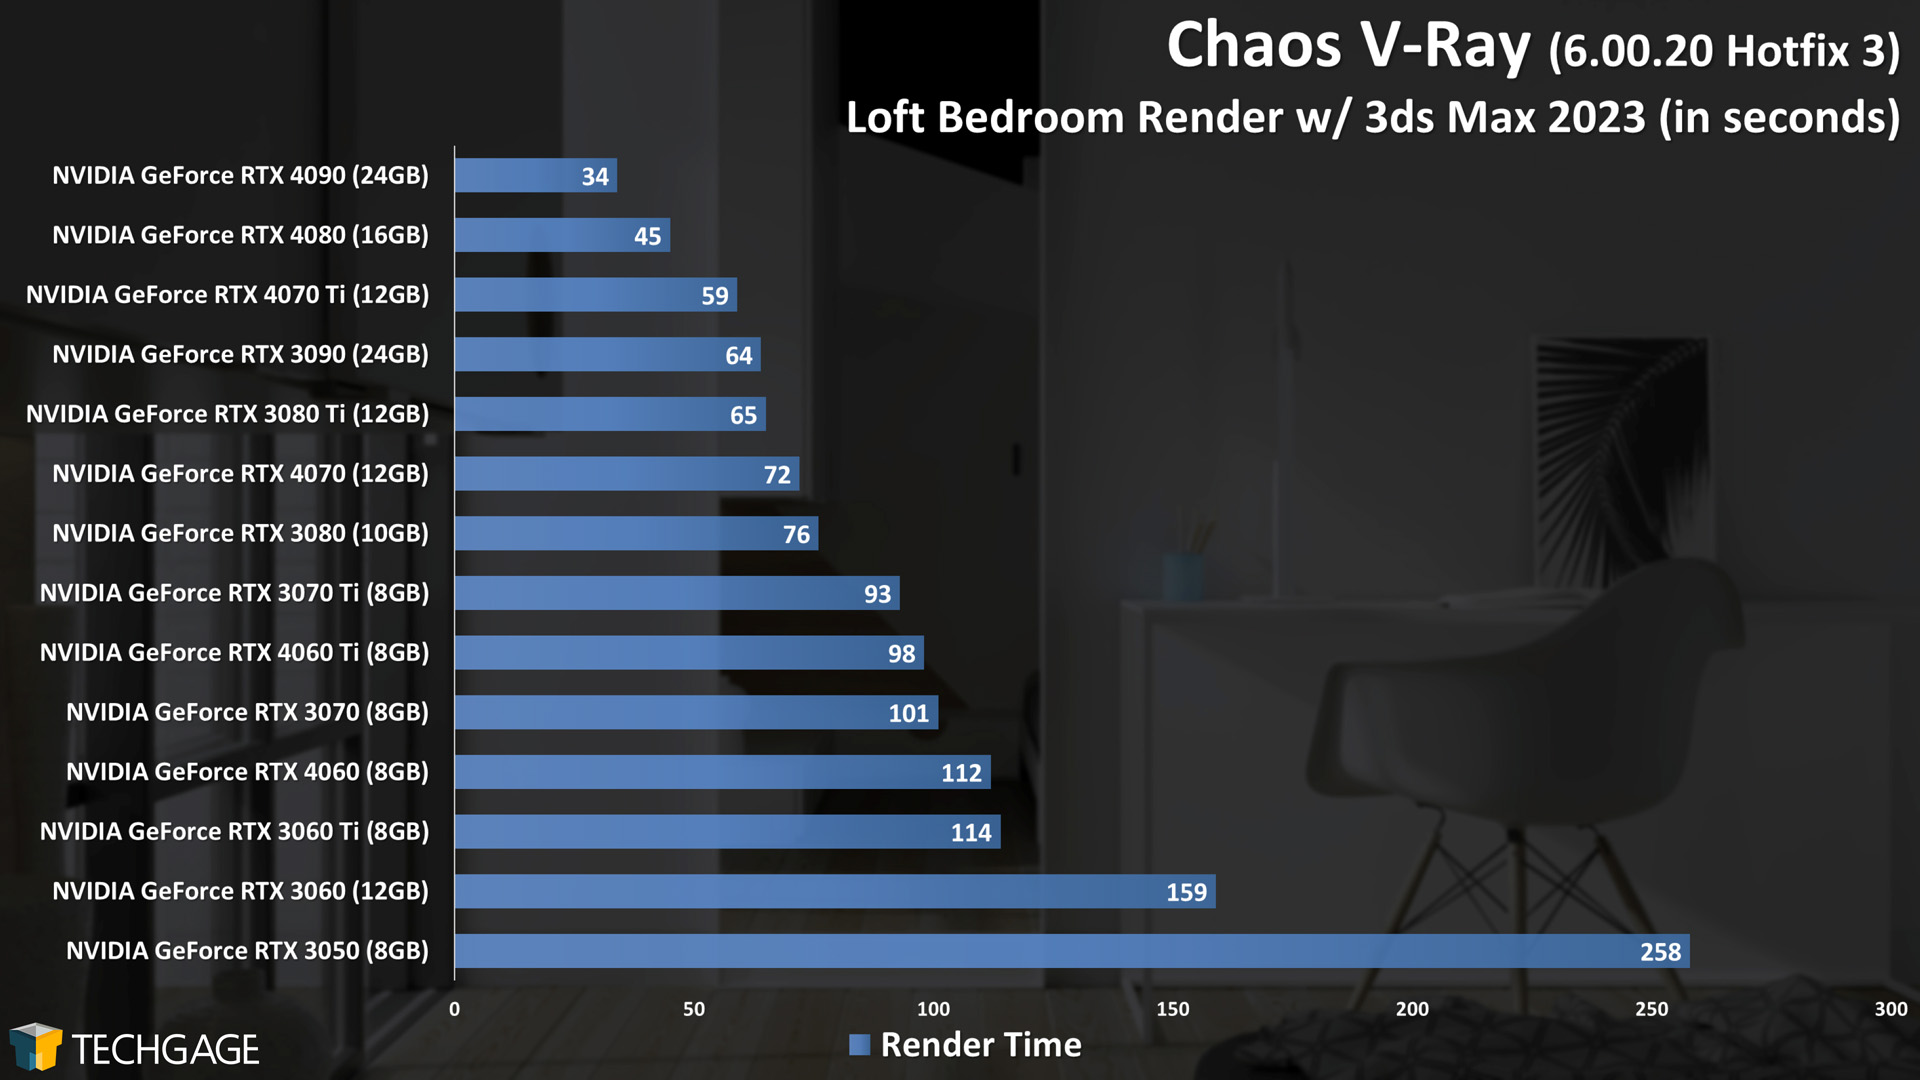 Chaos V-Ray - GPU Rendering Performance (Loft Bedroom)